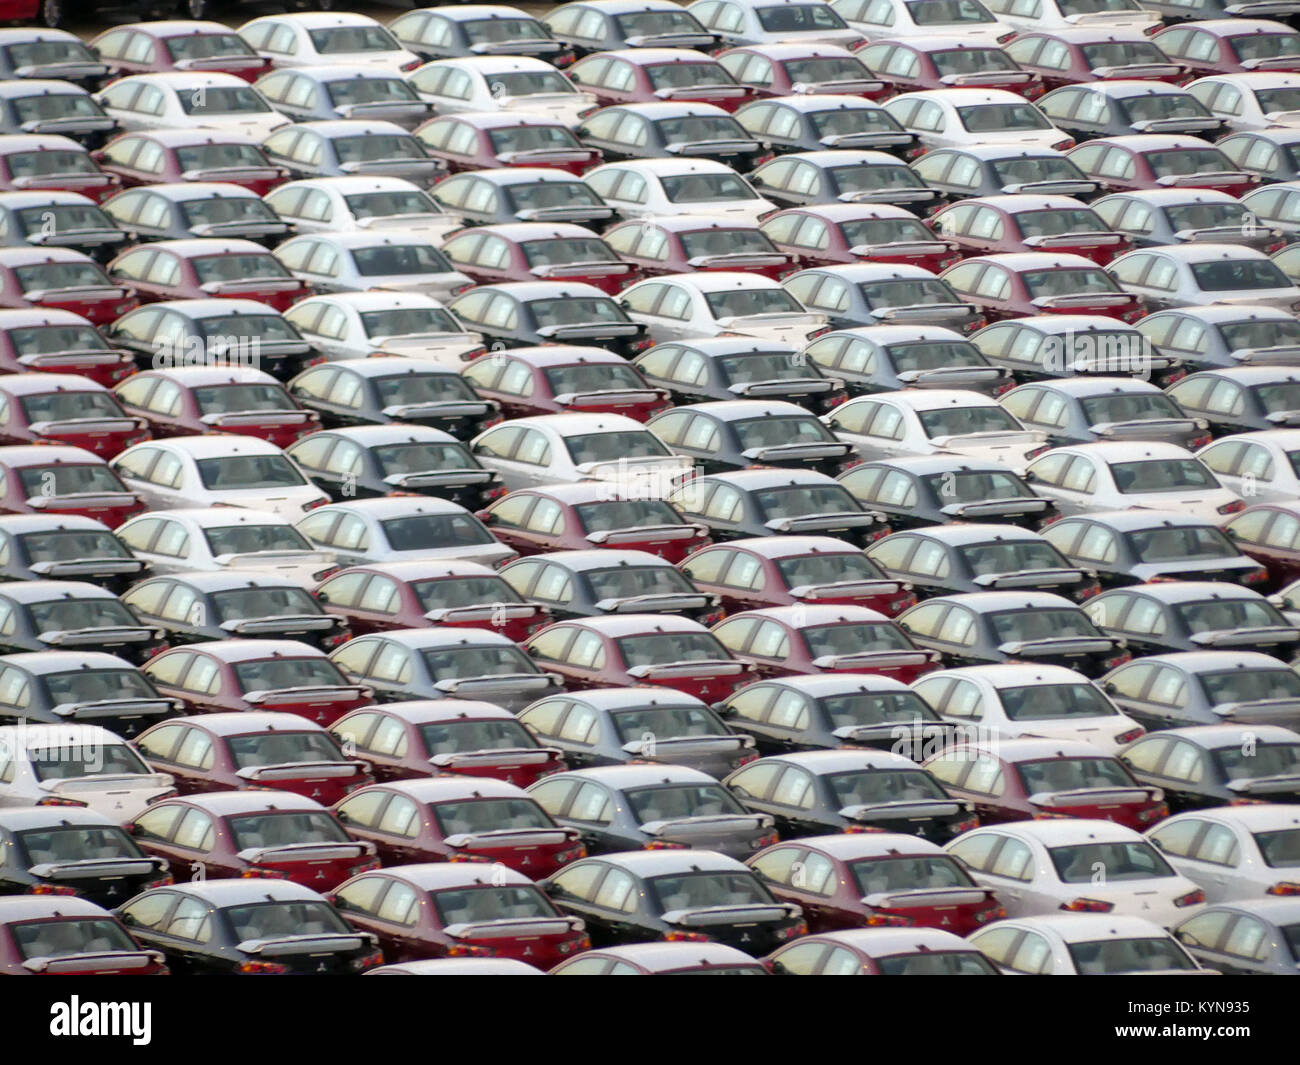 JAPANESE CAR IMPORTS at Dubai docks. Photo: Tony Gale Stock Photo